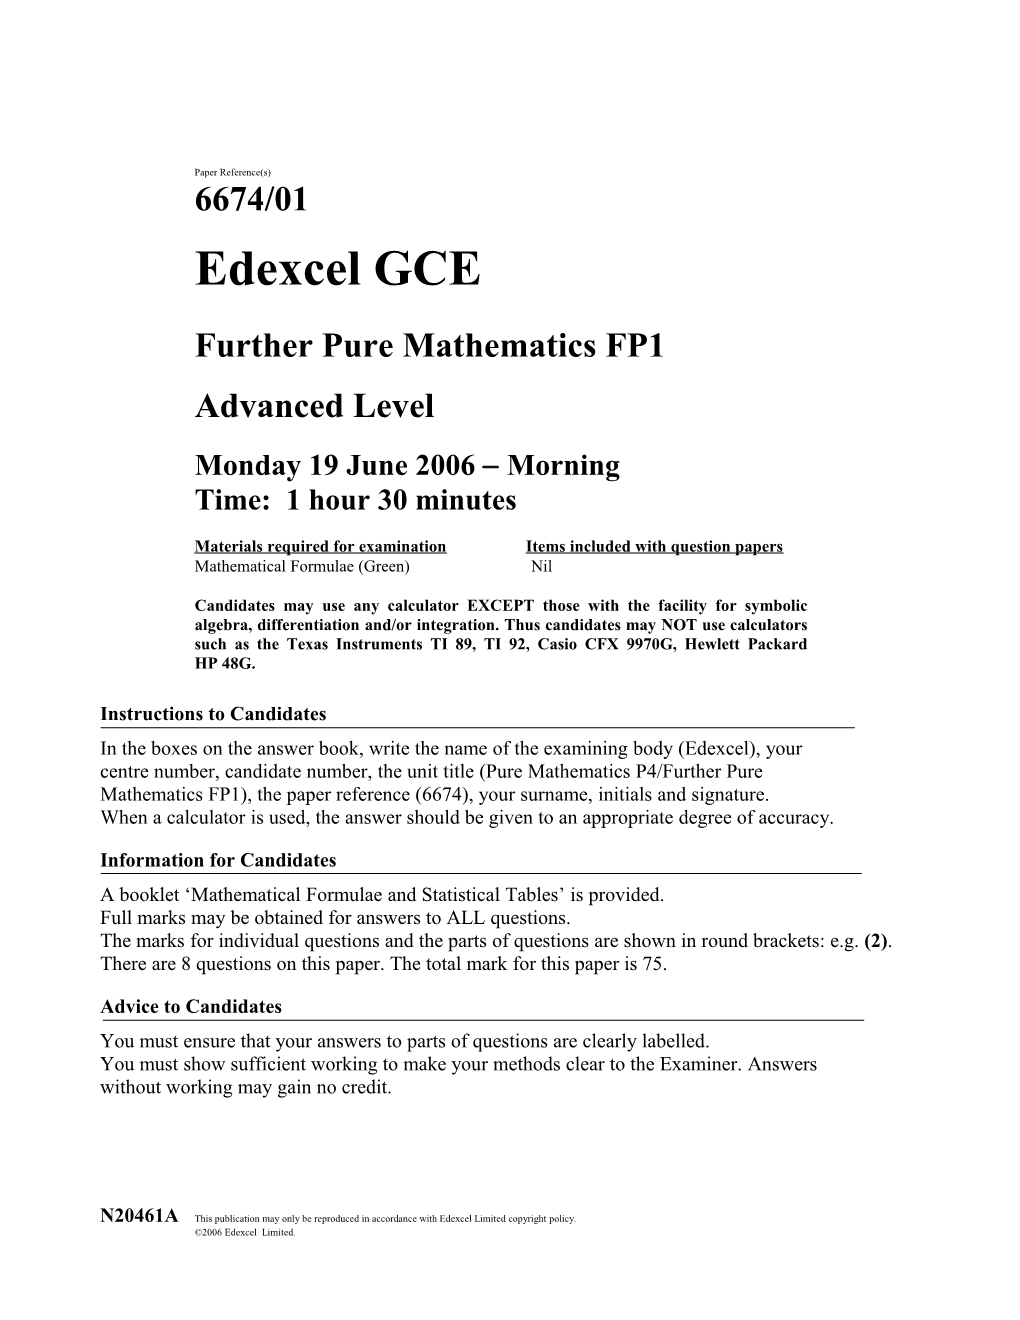 Further Pure Mathematics FP1